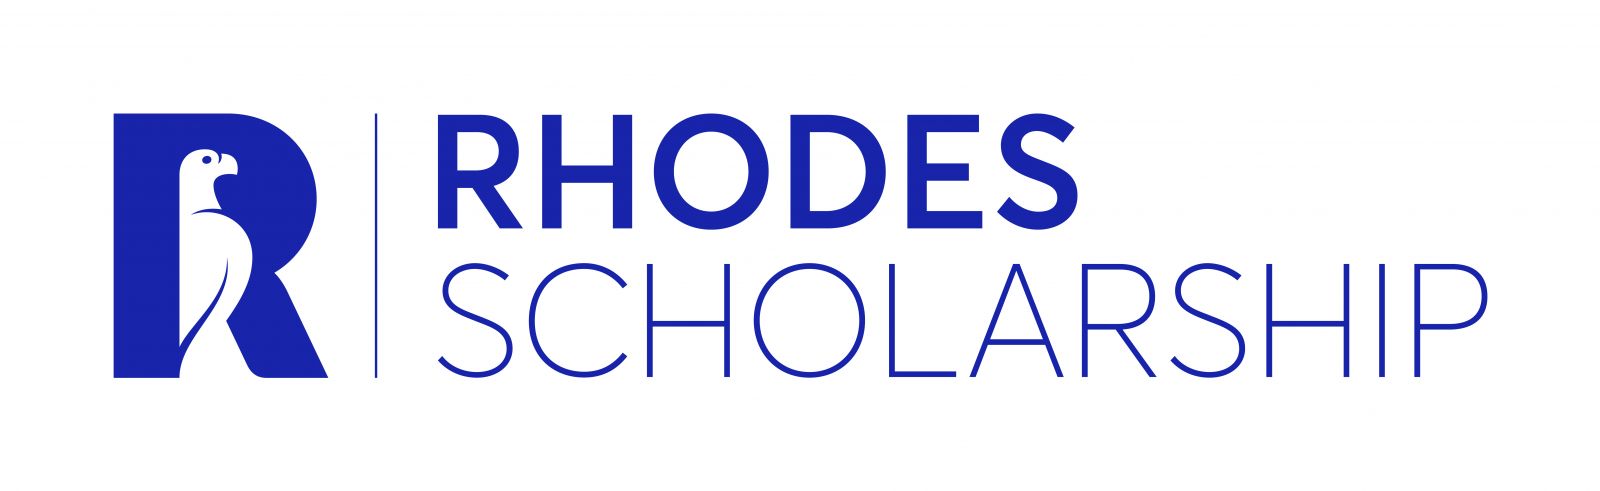 Rhodes blue logo